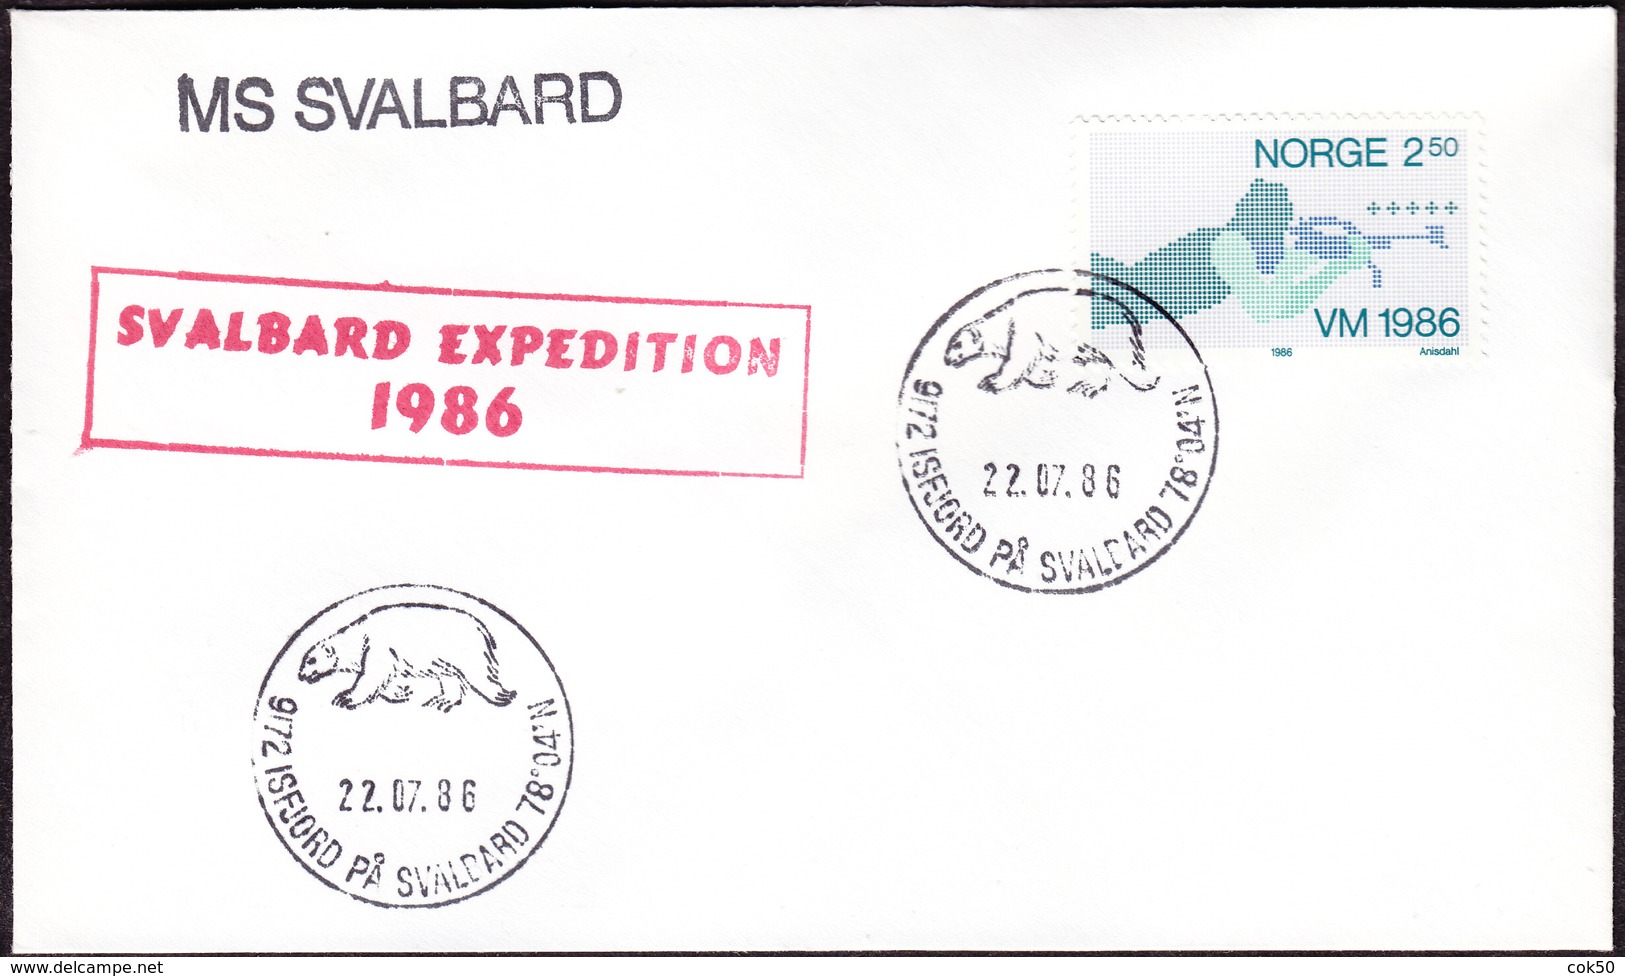 NORWAY - M/S "Svalbard" Expedition 1986, 9172 Isfjord At Svalbard 22.07.86 (icebear) - Arctic Wildlife